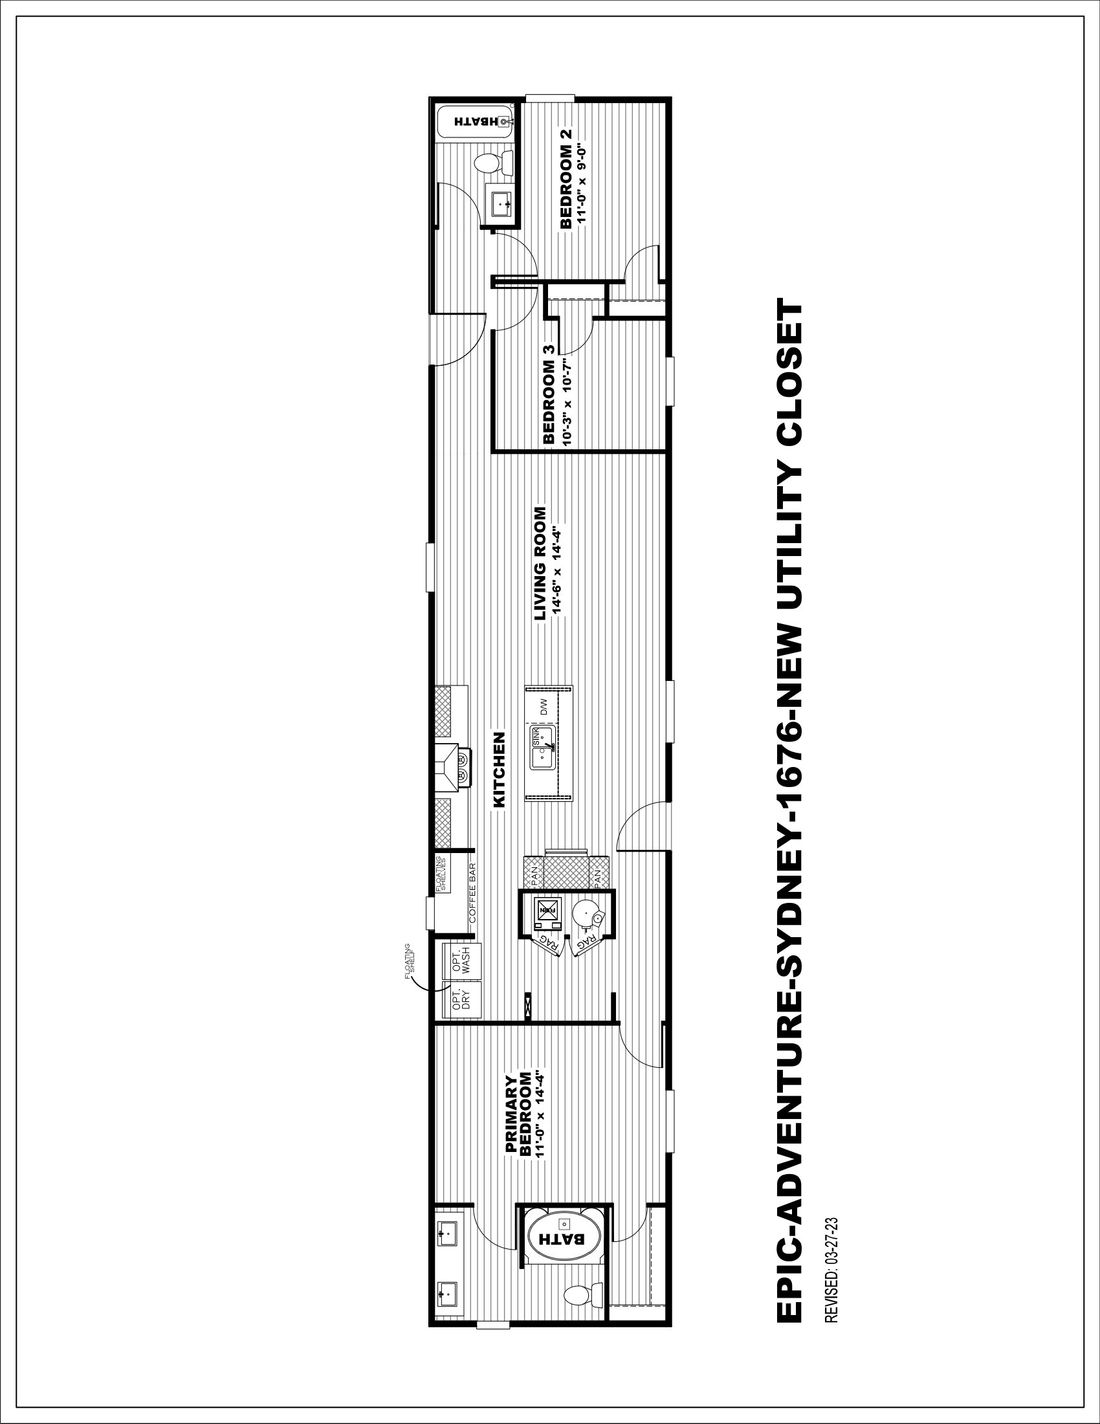 The SYDNEY 8016-1076 Floor Plan